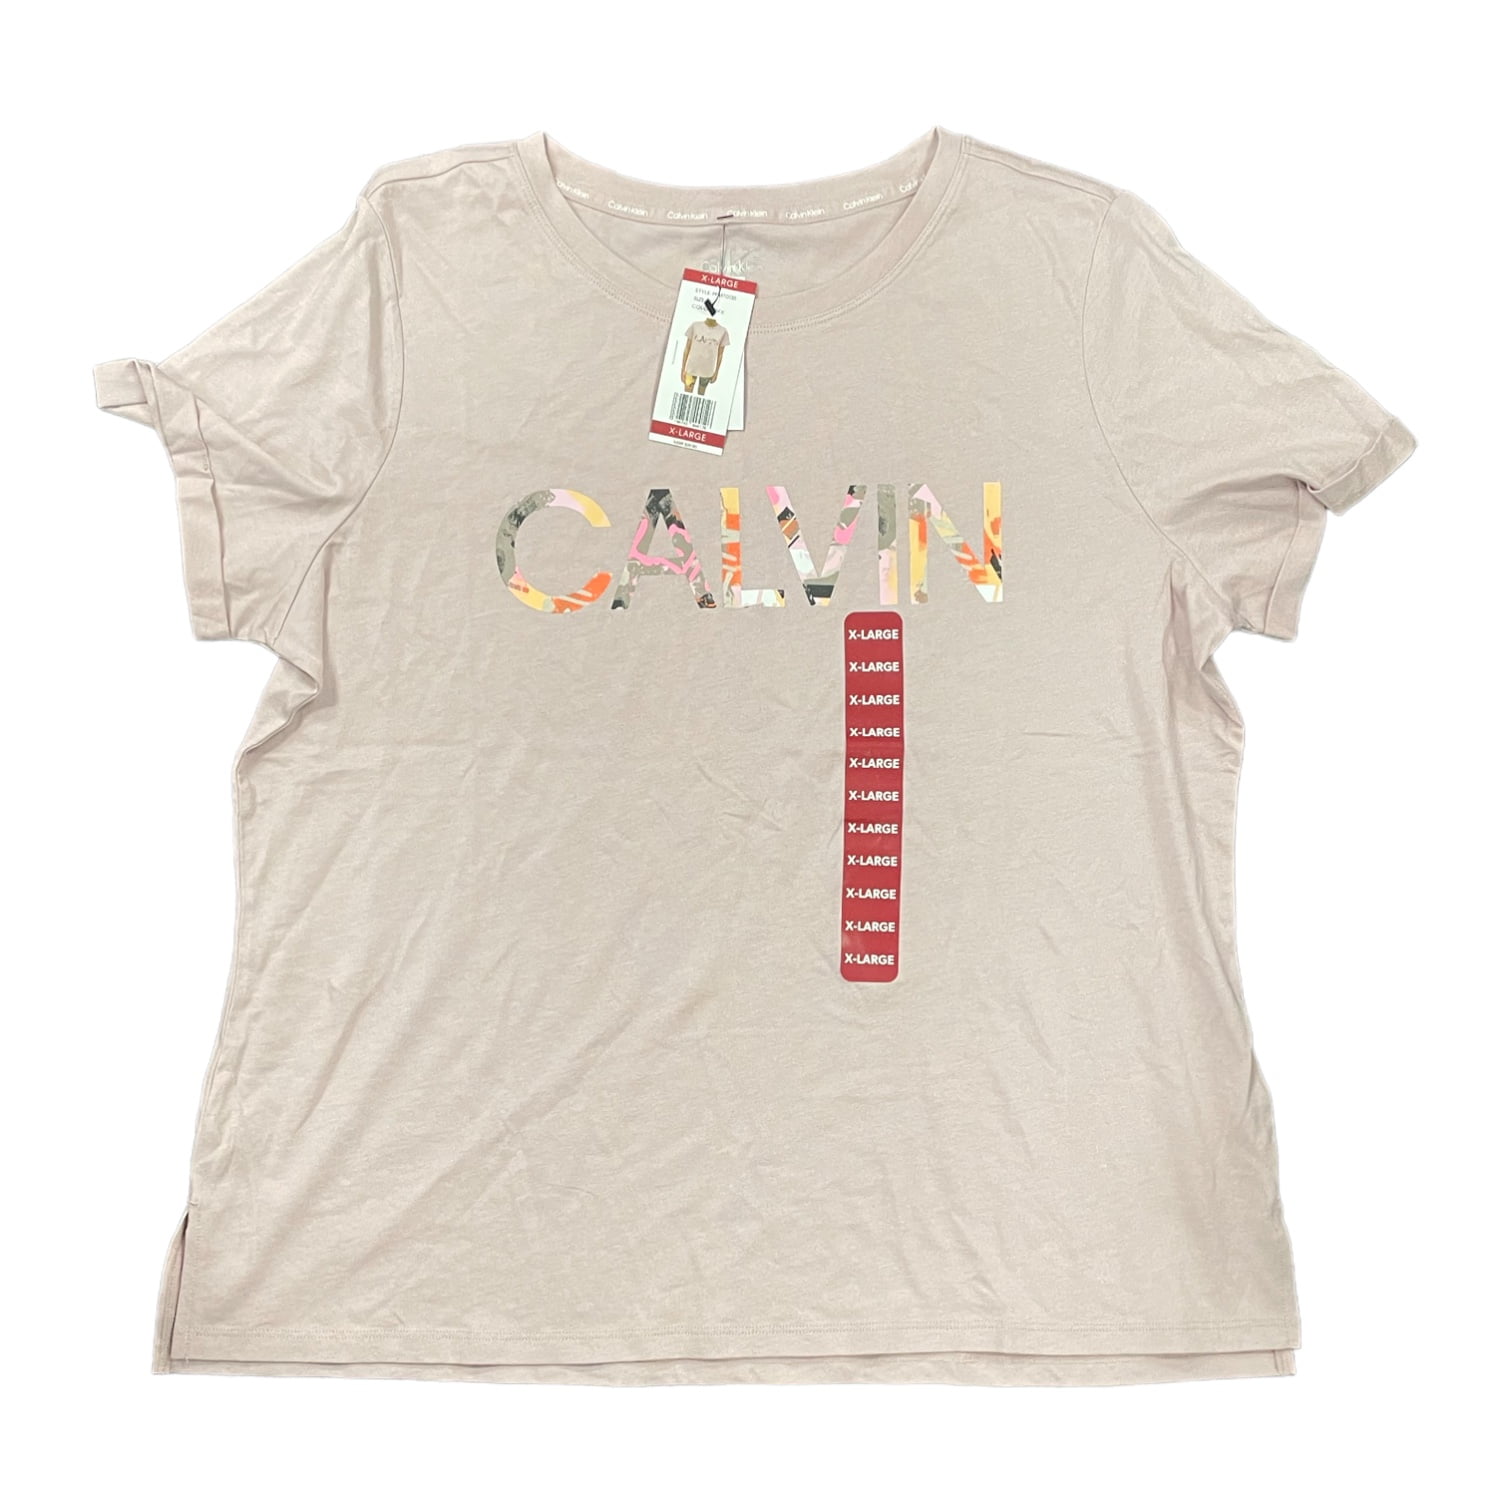 Calvin Klein Women's Soft Crew Neck Rolled Sleeve Graphic Logo T-shirt  (Americana Camo/White, M)